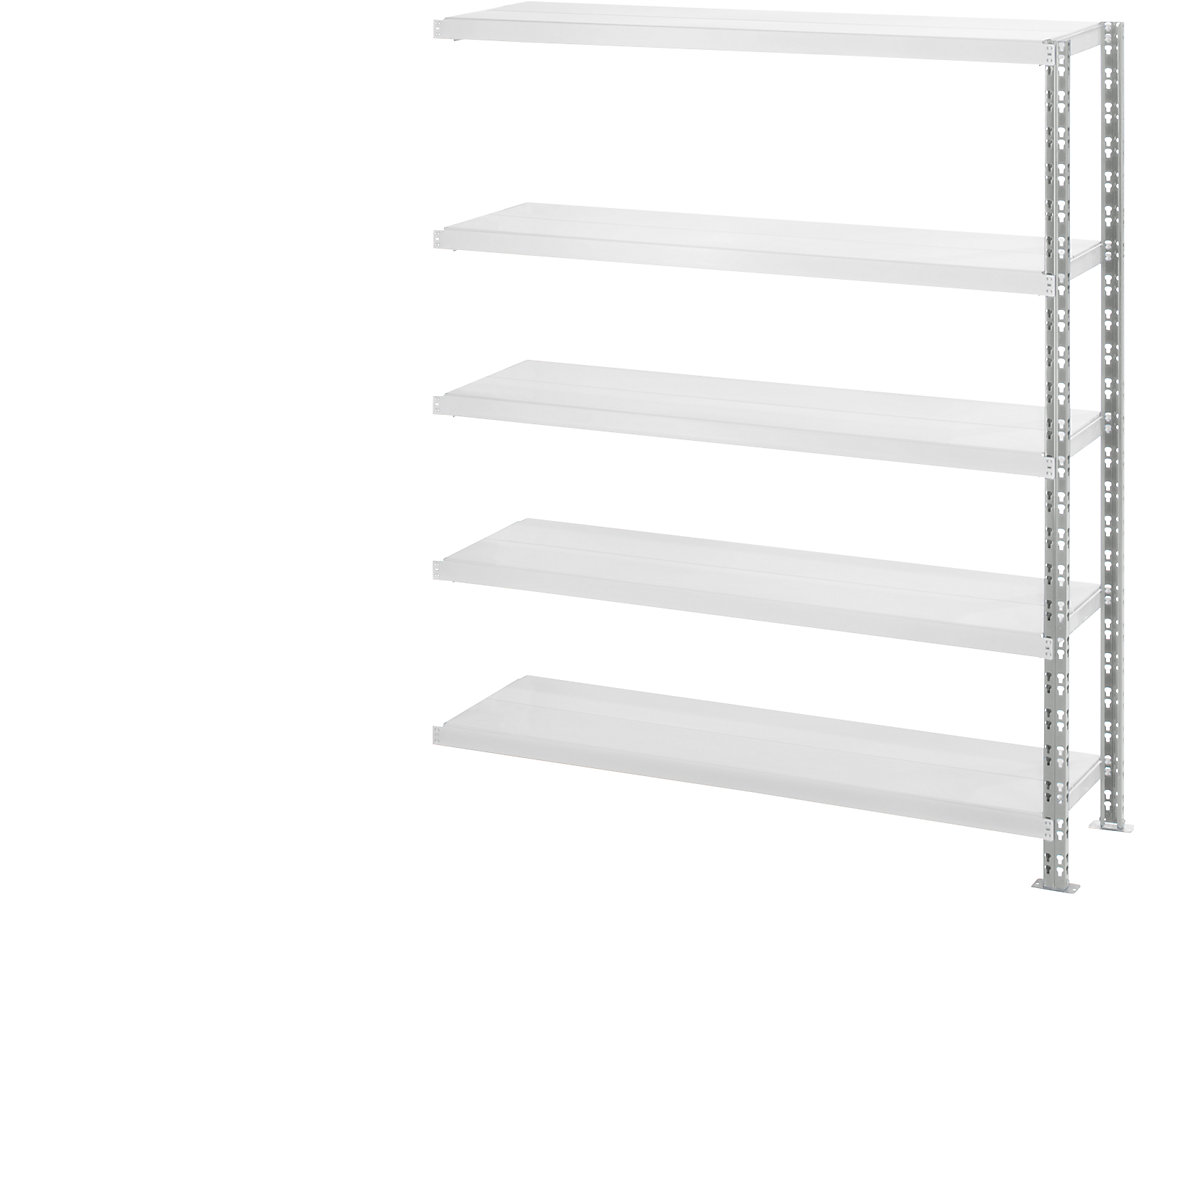 Wide span shelf unit with sheet steel shelves, depth 500 mm, extension shelf unit, HxW 1820 x 1525 mm